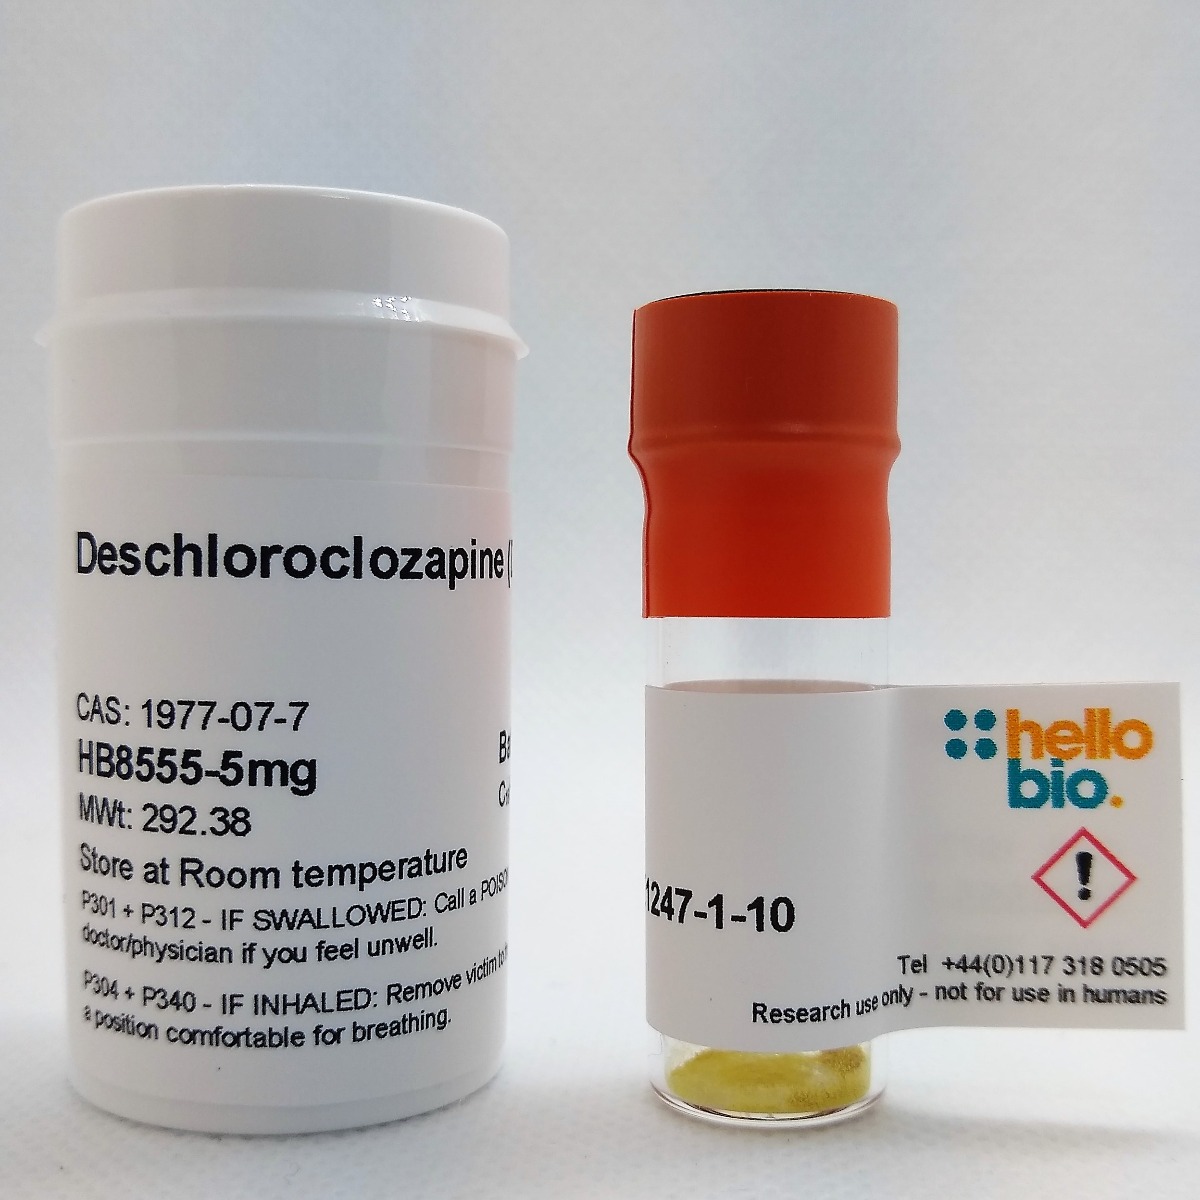 Deschloroclozapine (DCZ) product vial image | Hello Bio